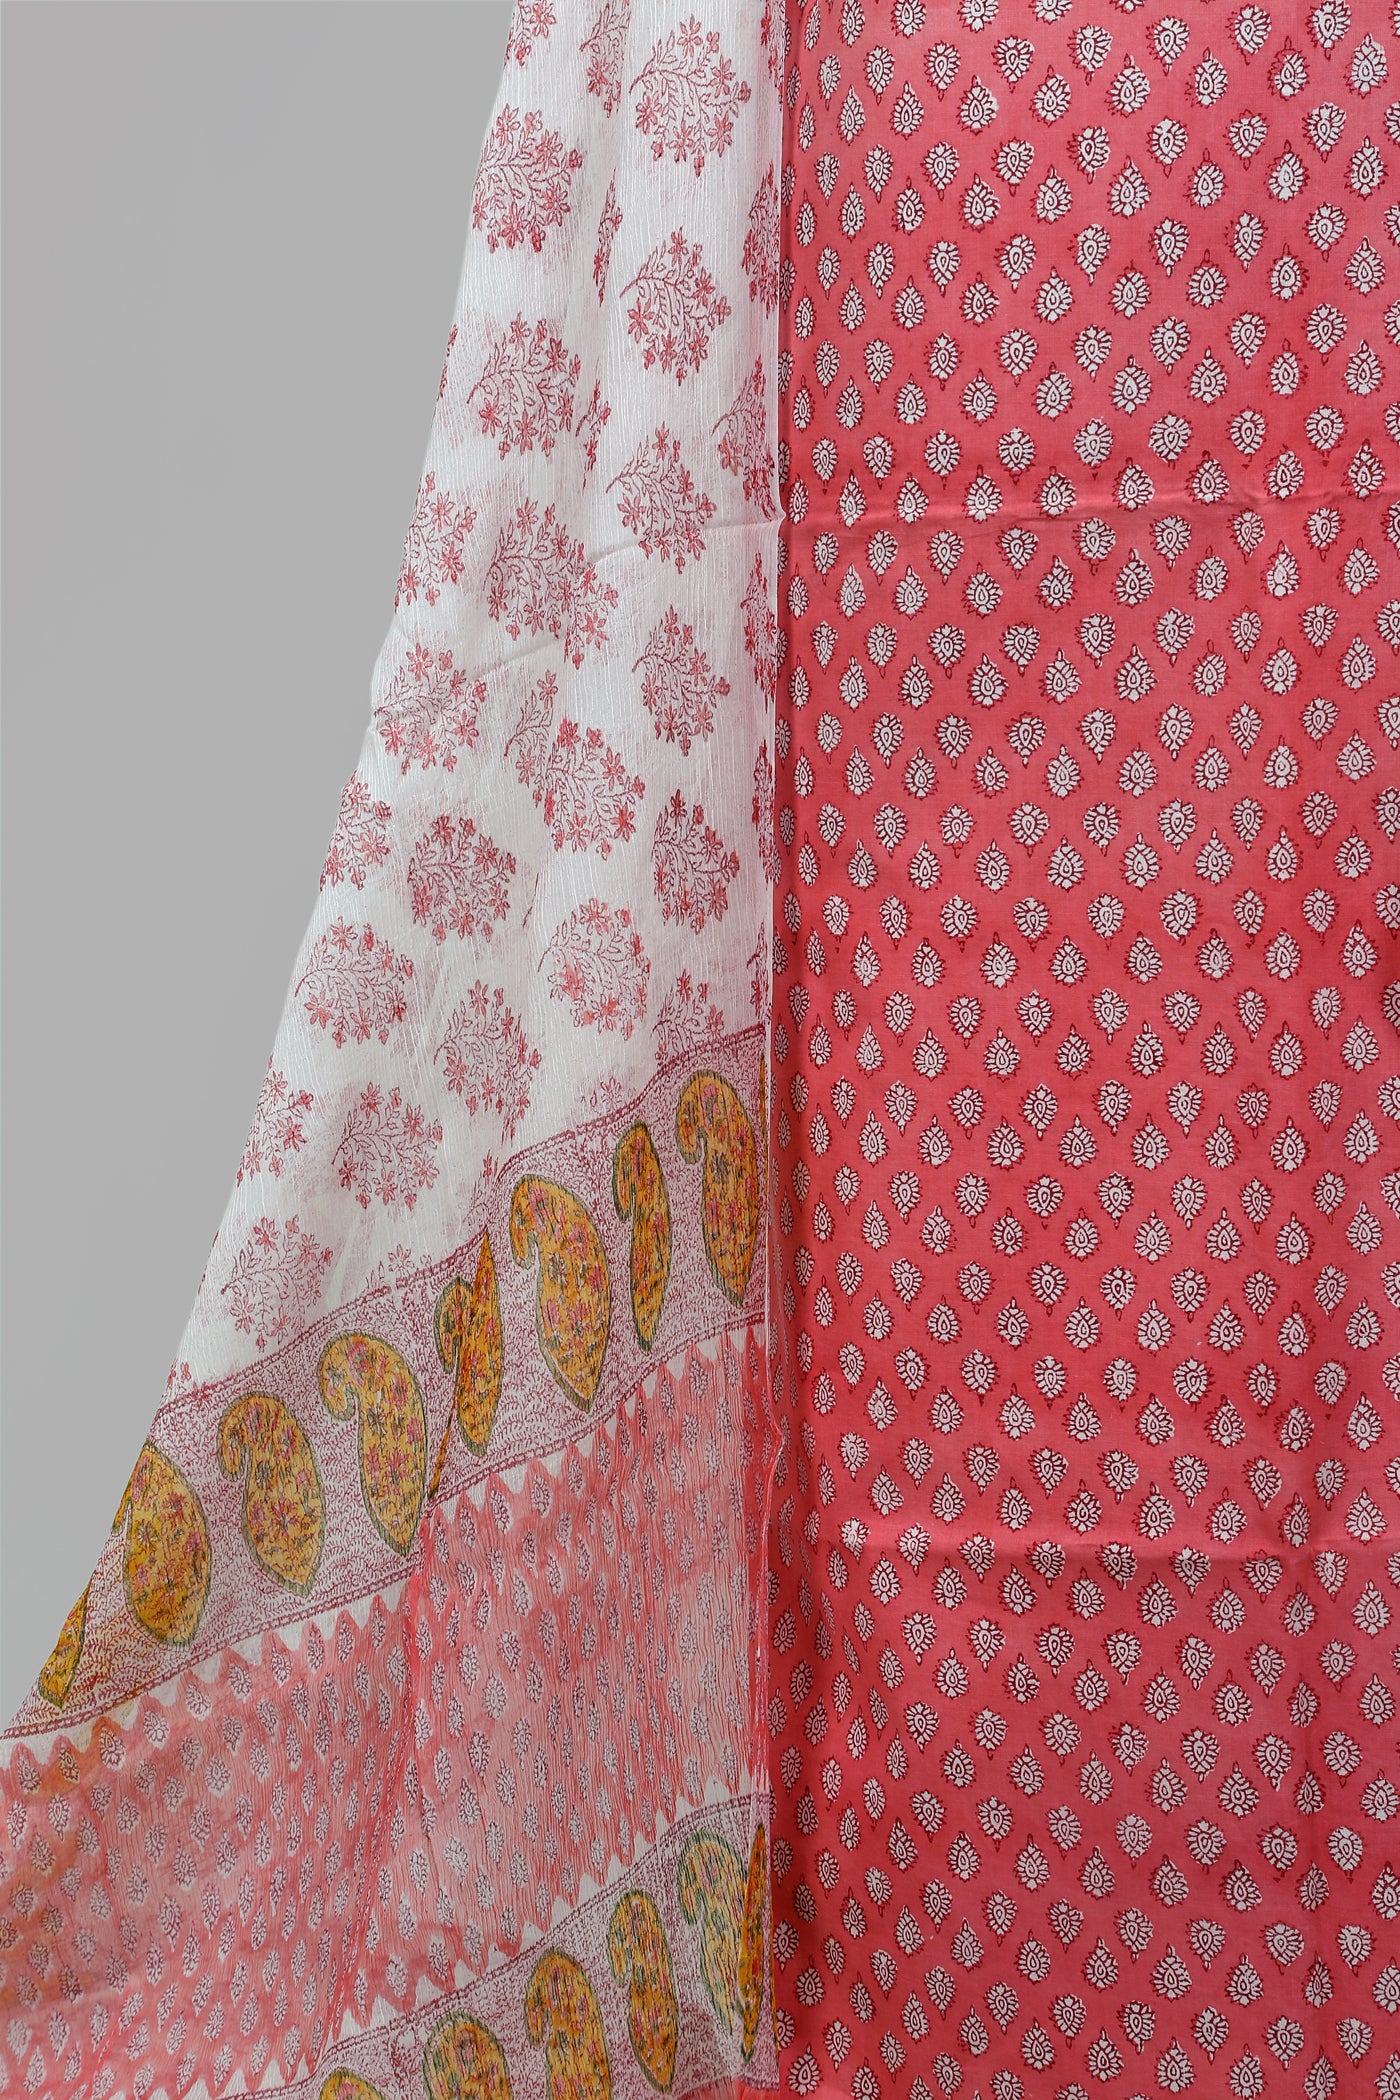 Cotton cambric block printed dress material with chiffon dupatta